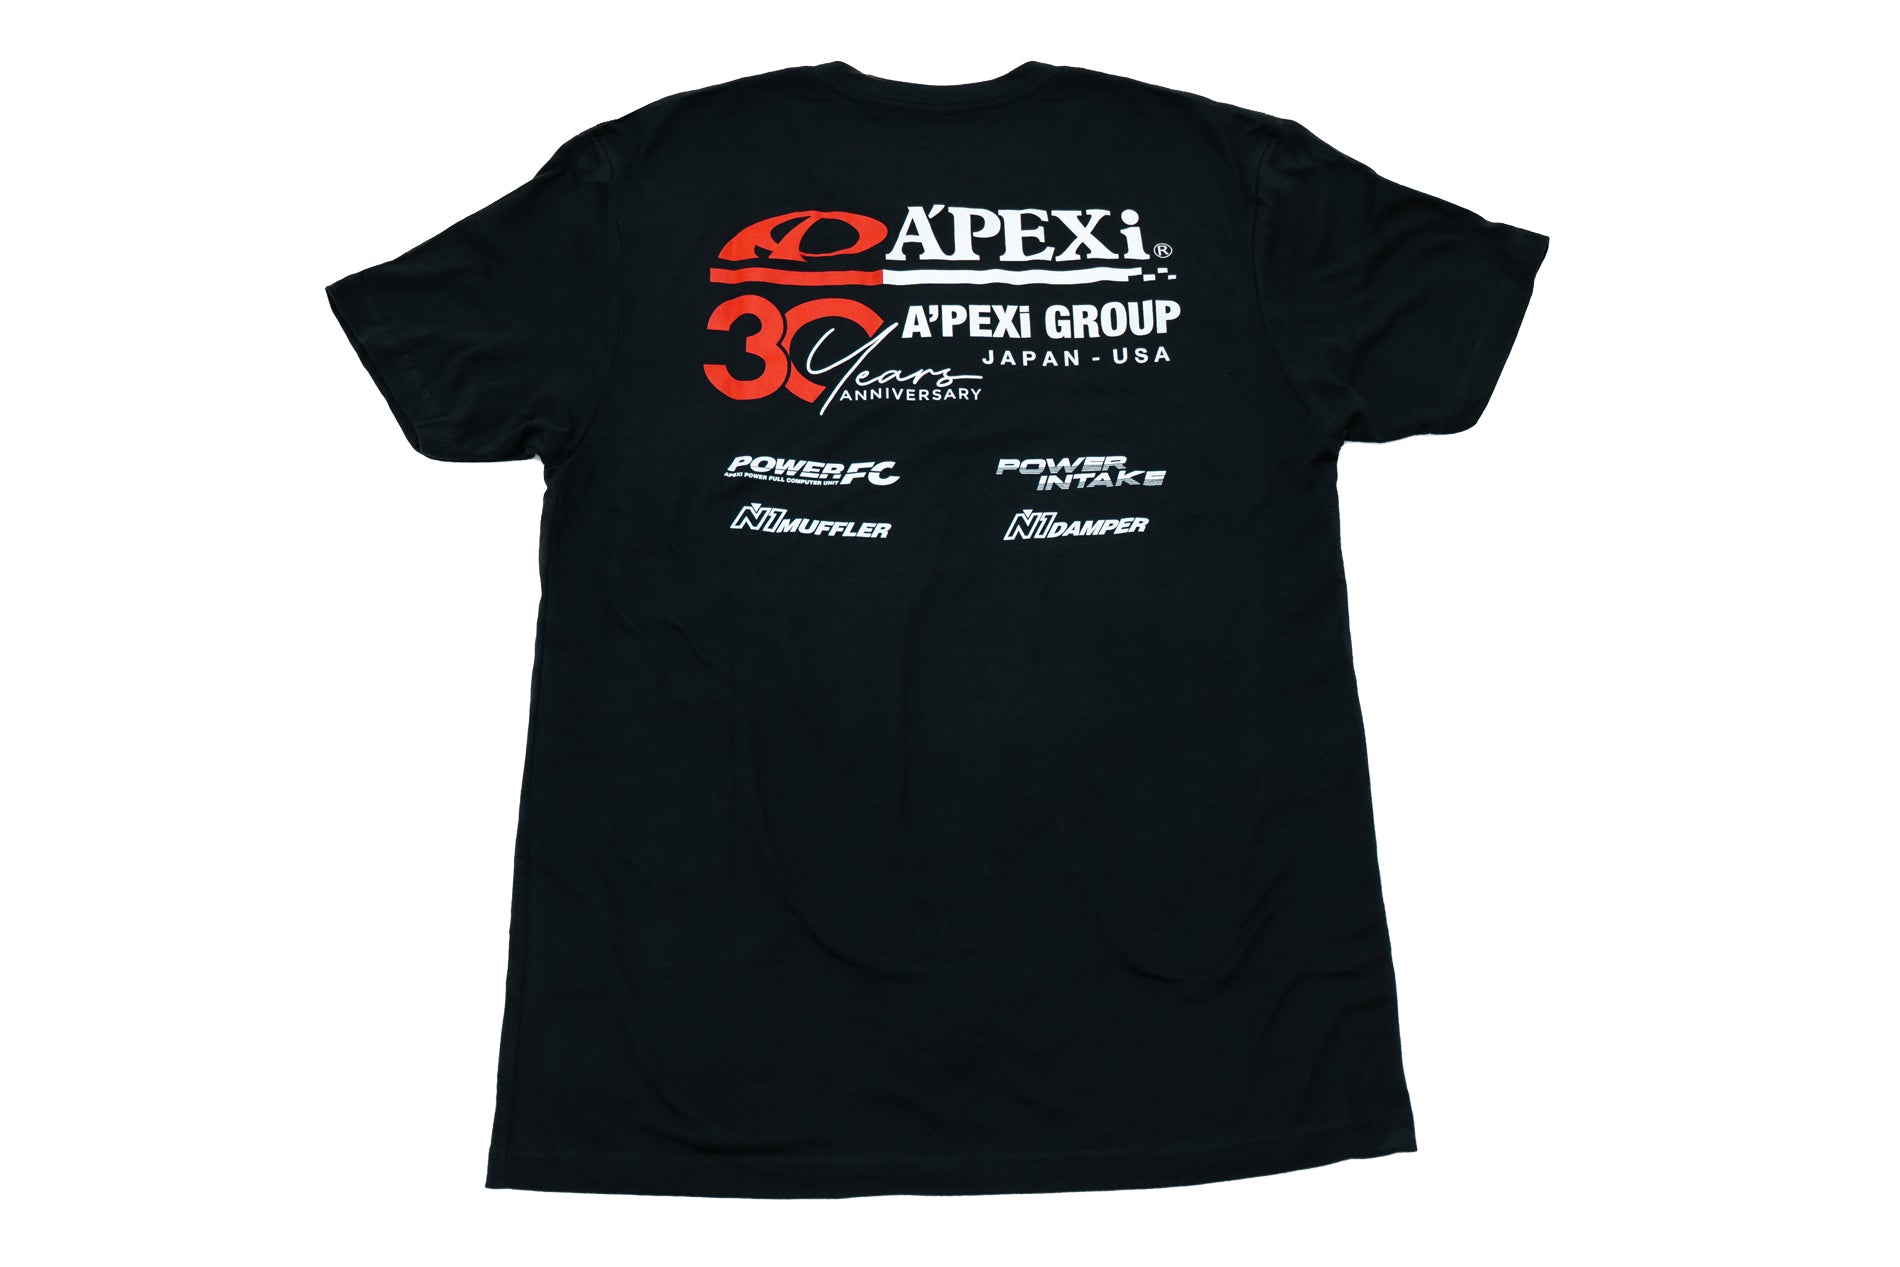 A'PEXi - A'PEXi 30th Anniversary T-Shirt ** LIMITED EDITION **